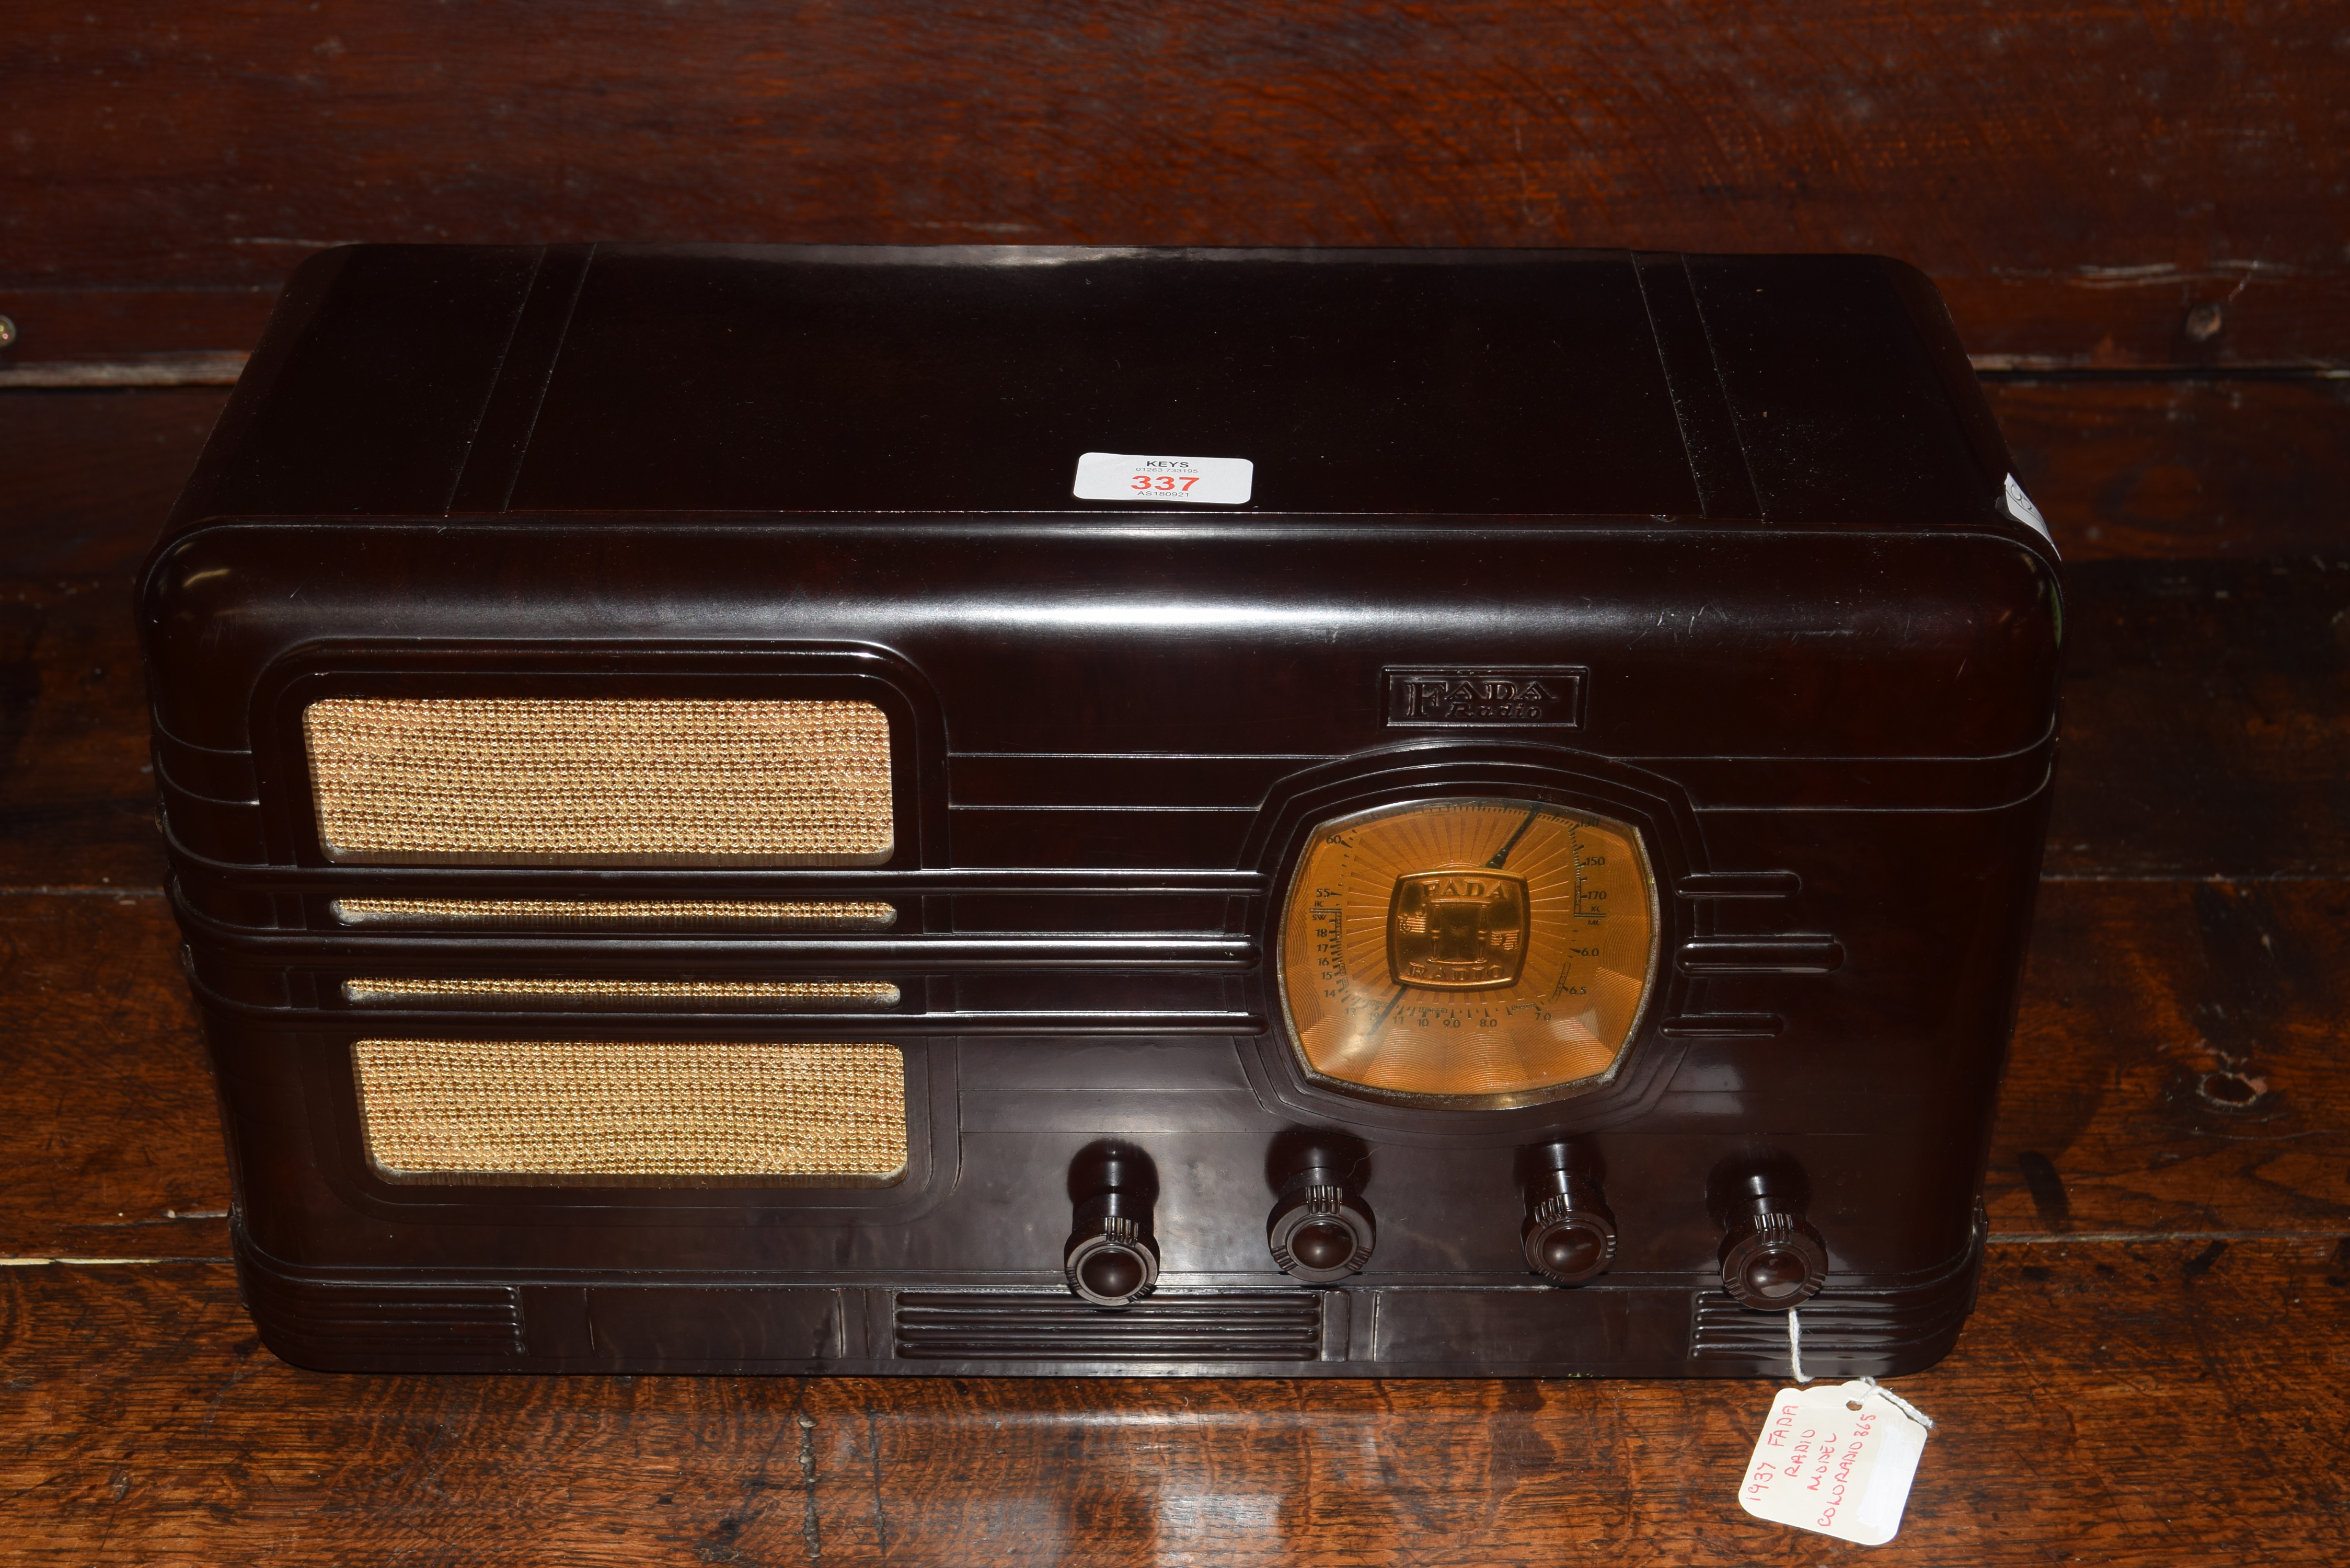 Fada Bakelite cased radio model Coloradio 365, 43cm wide - Image 2 of 2